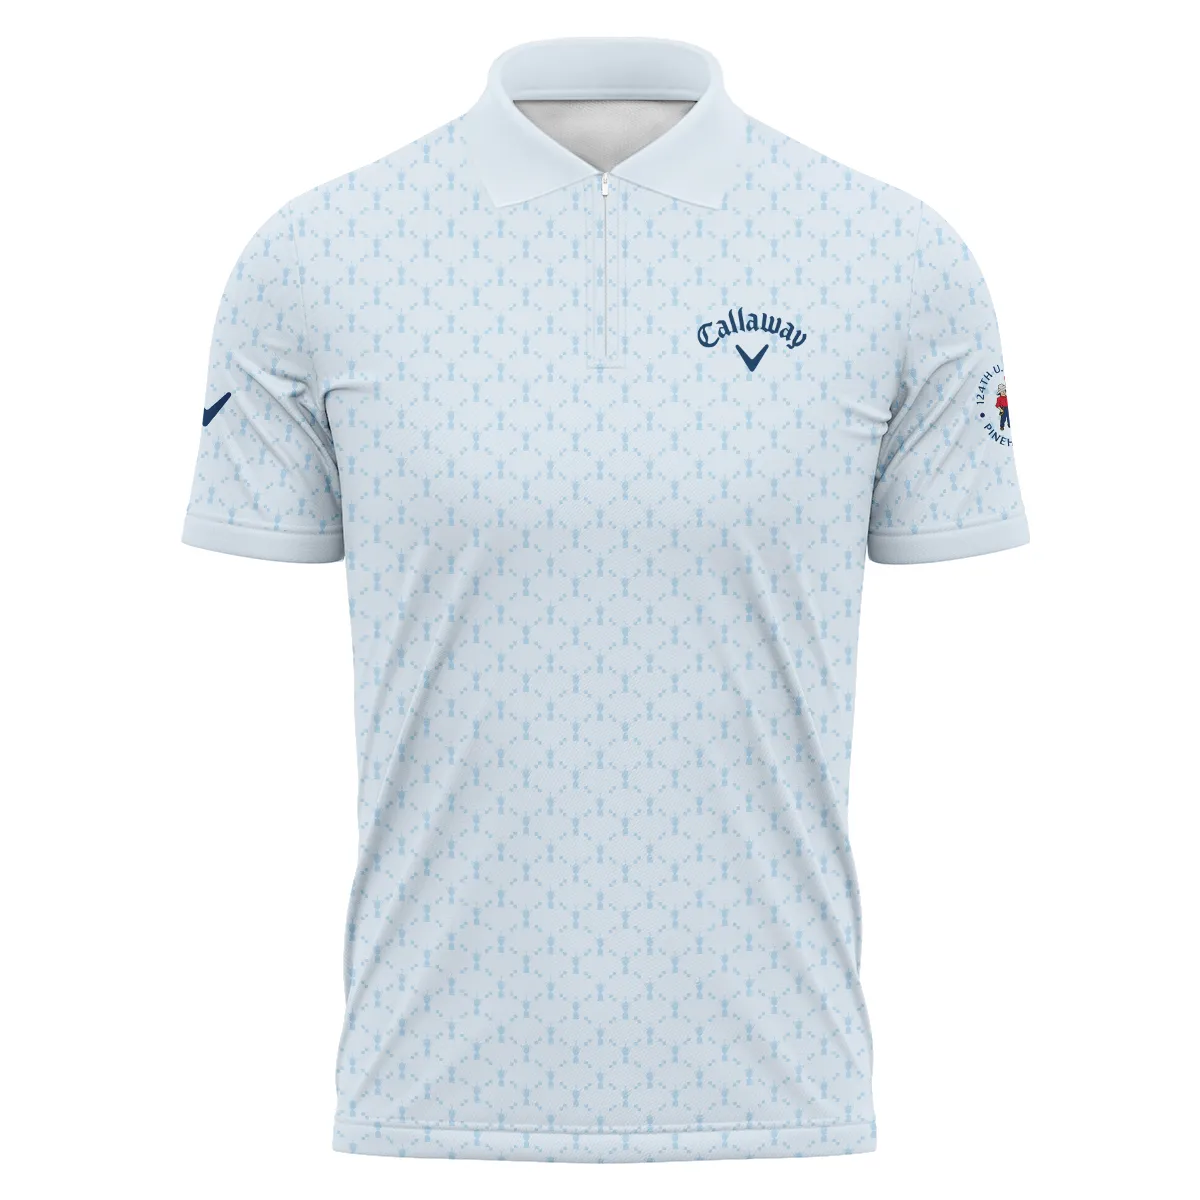 Golf Sport Pattern Blue Sport Uniform 124th U.S. Open Pinehurst Callaway Zipper Polo Shirt Style Classic